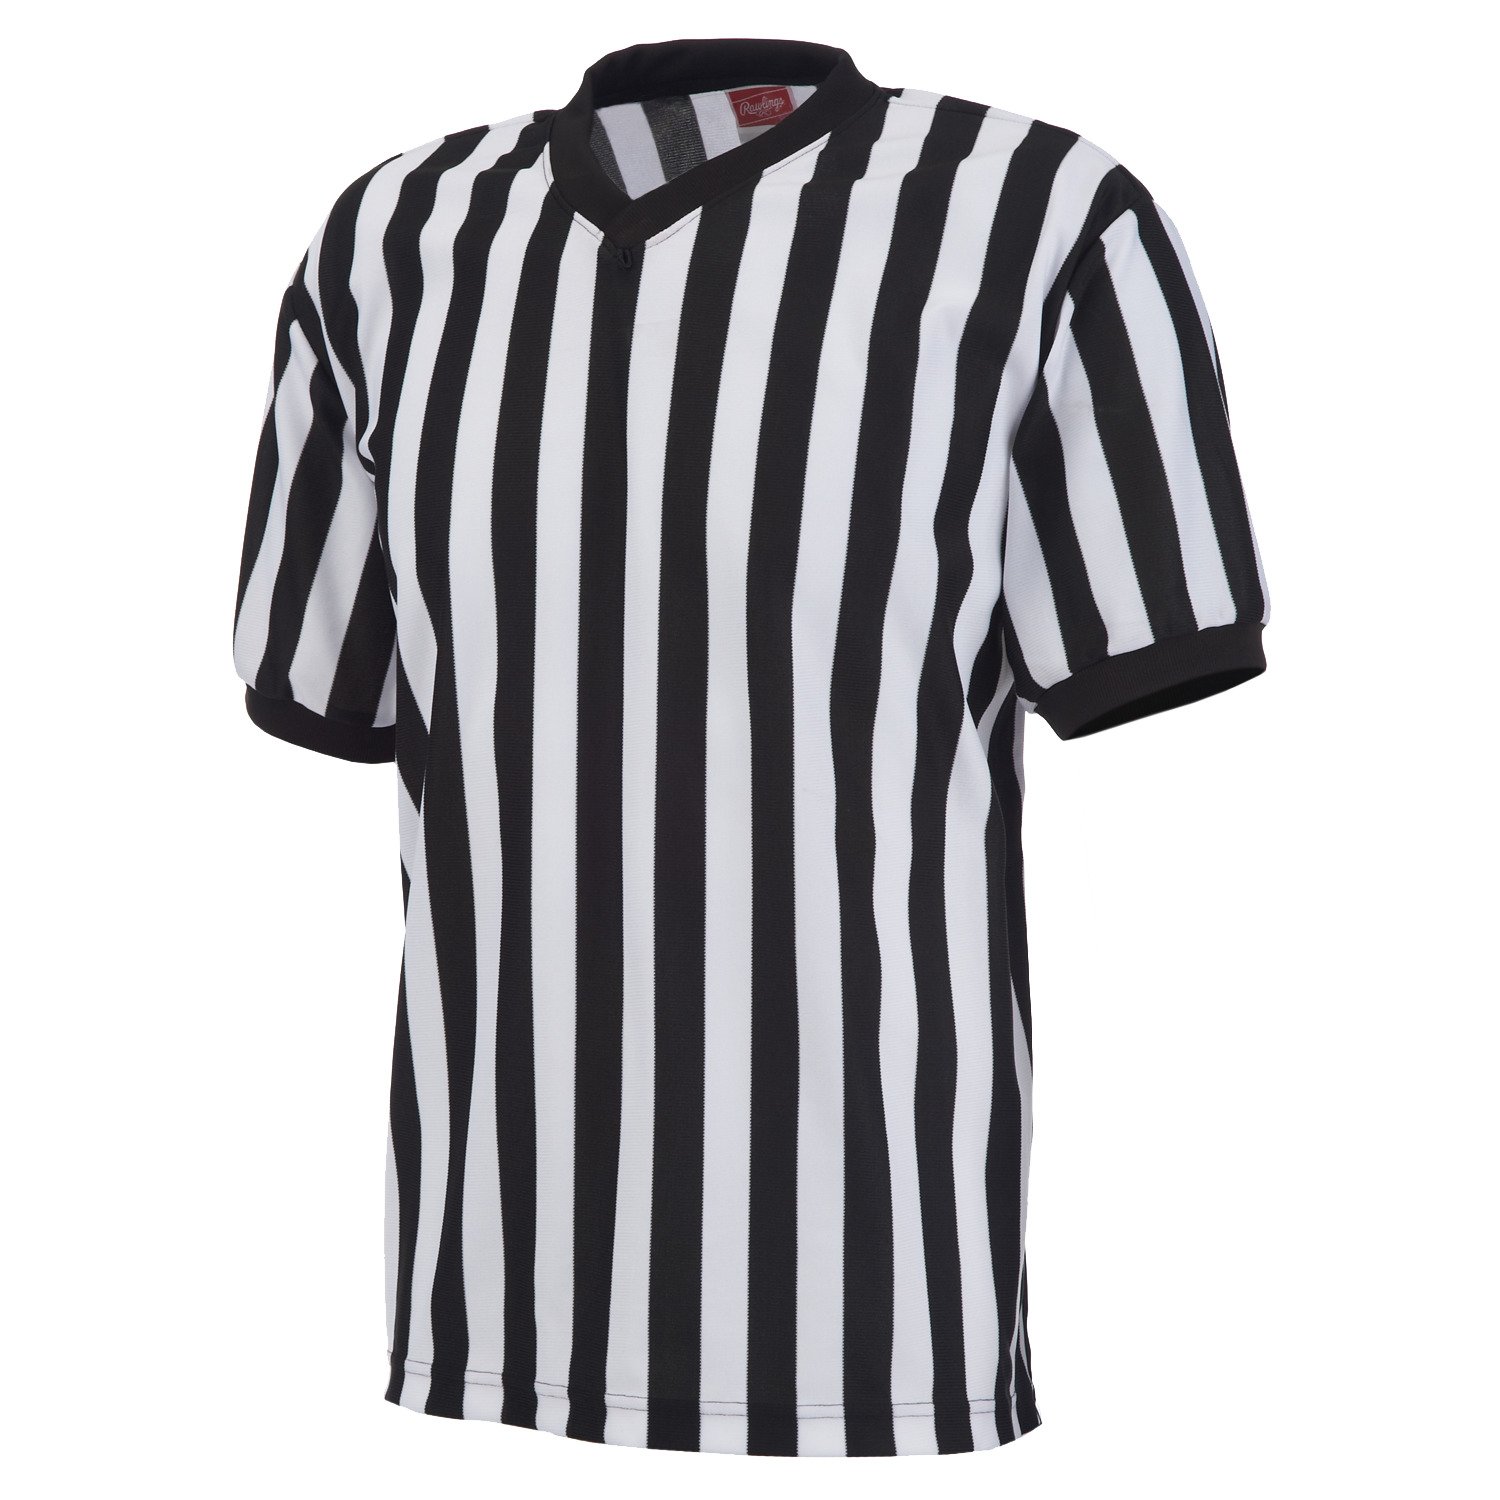 Basketball Referee Uniforms & Equipment – Final Score Sporting Goods